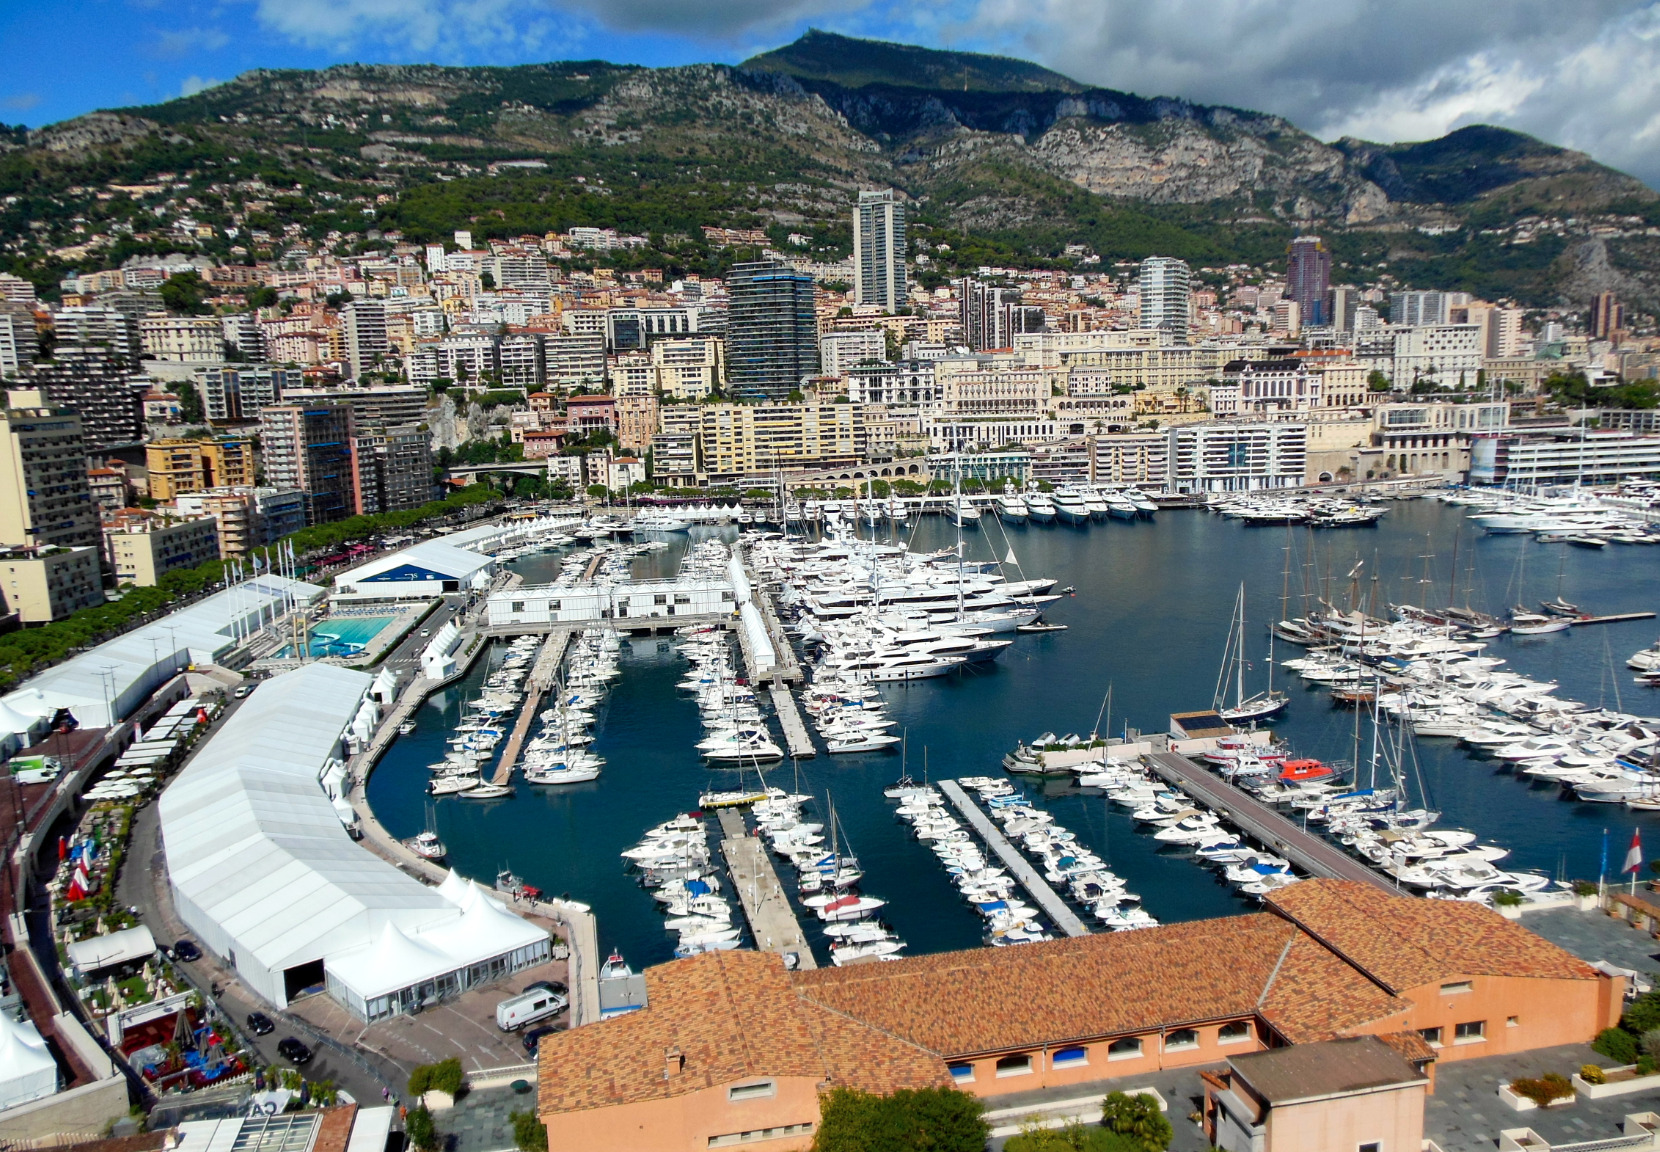 The harbor of the Principality of Monaco